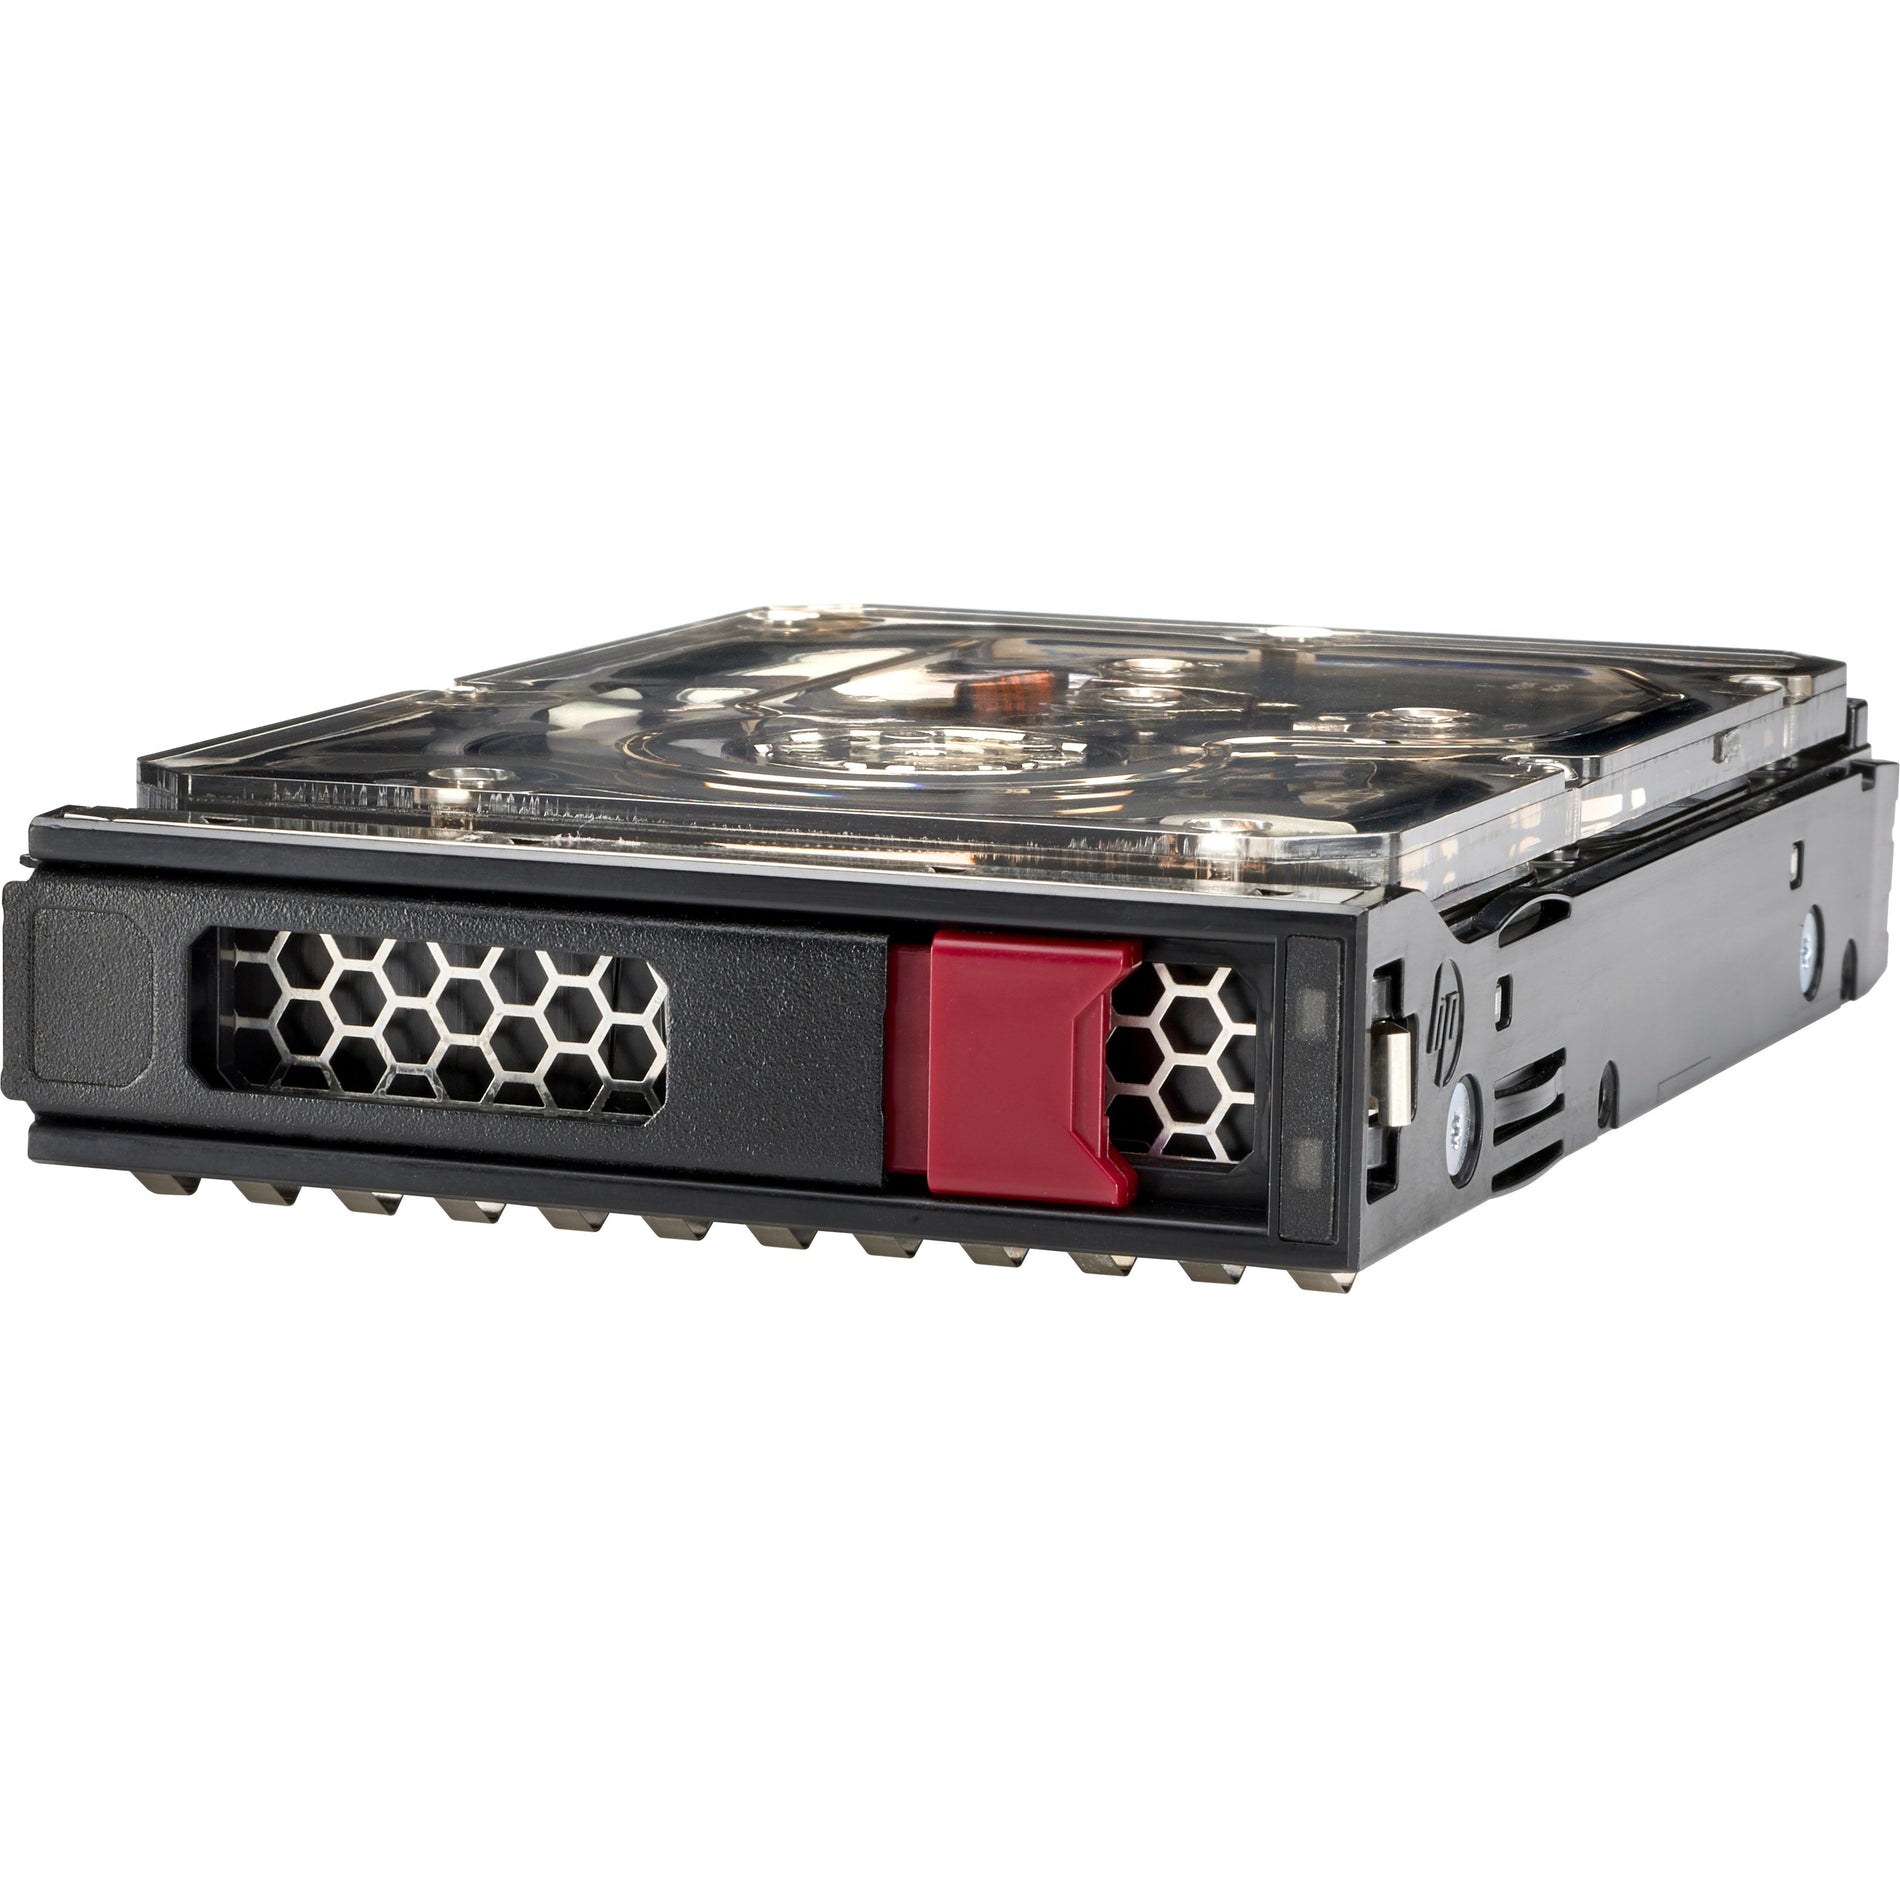 HPE 834028-B21 Hard Drive 8 TB SATA Internal, High Performance Storage